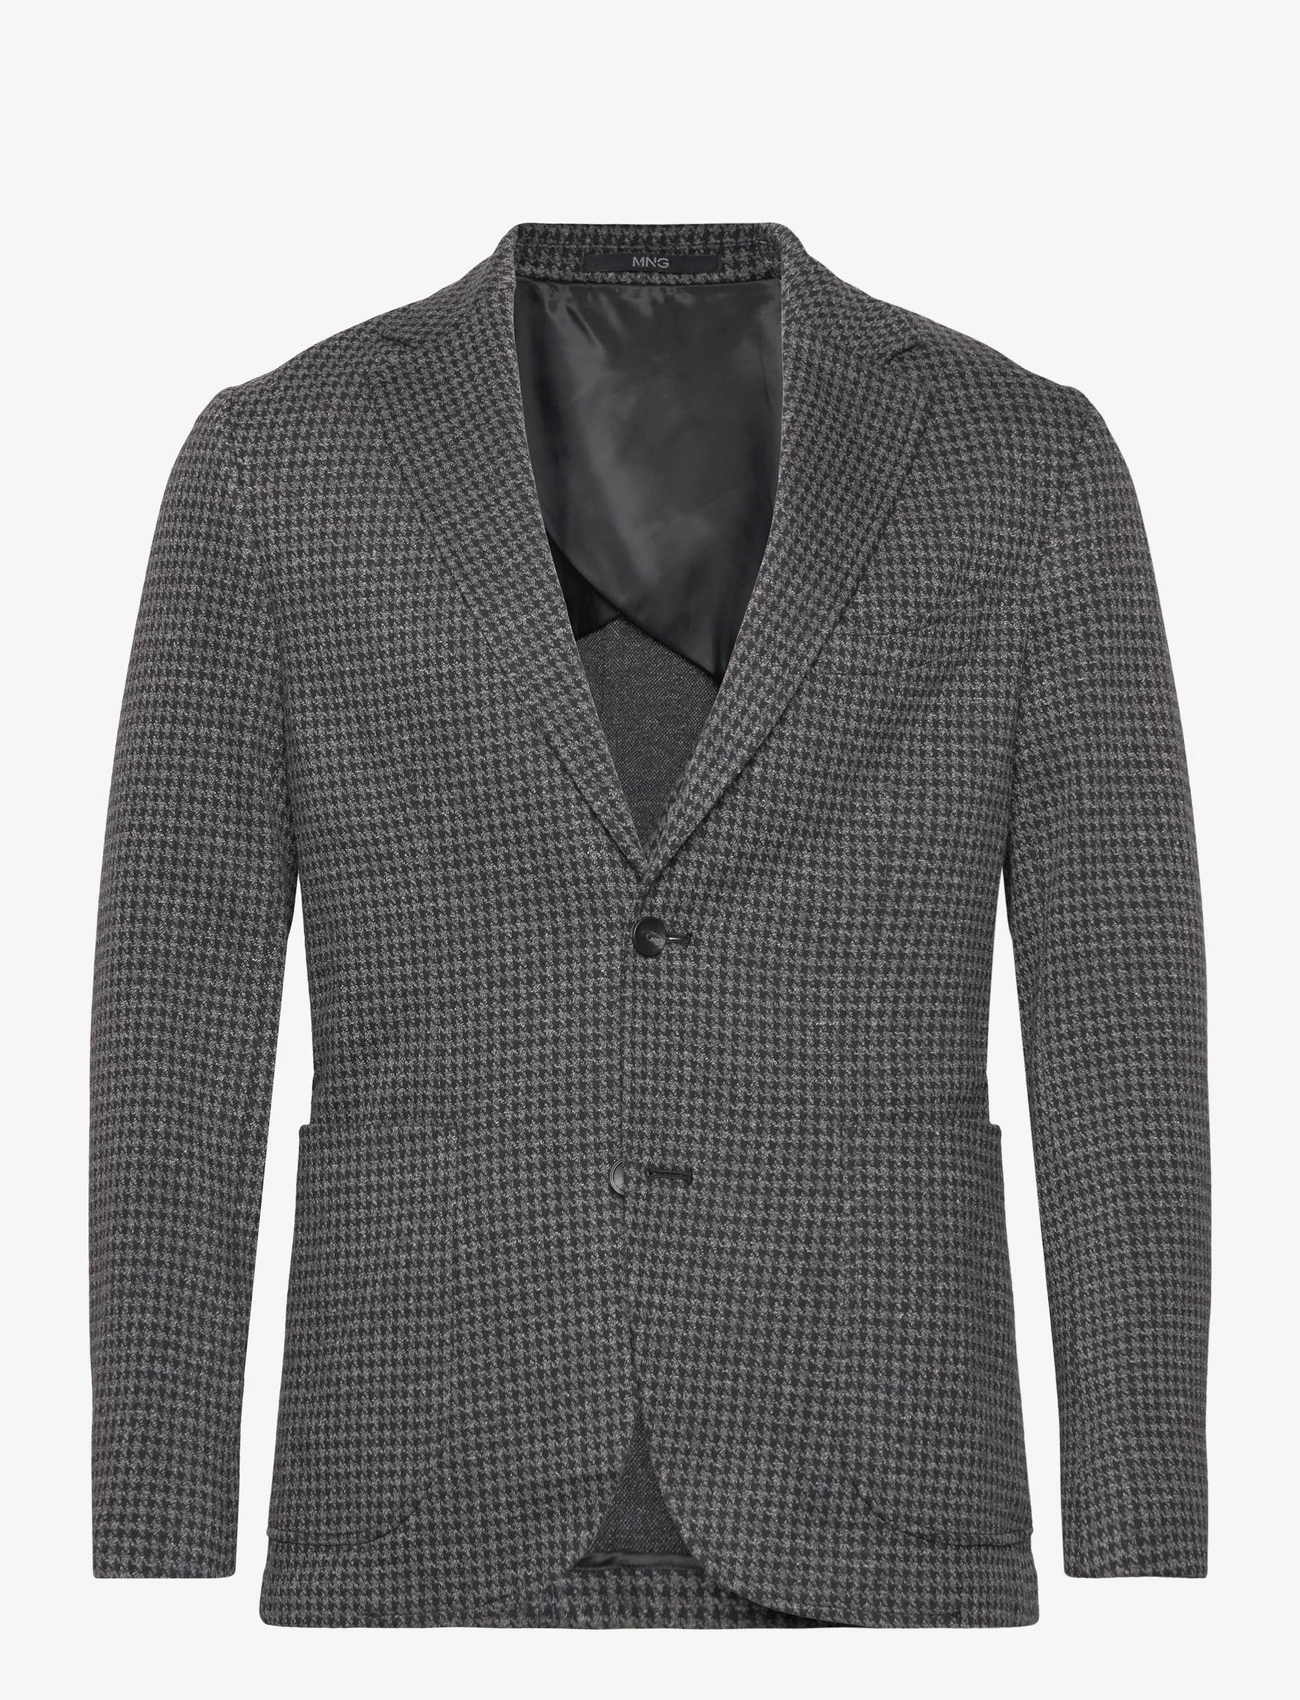 Mango - Slim-fit micro-houndstooth jacket - kaksiriviset bleiserit - grey - 0